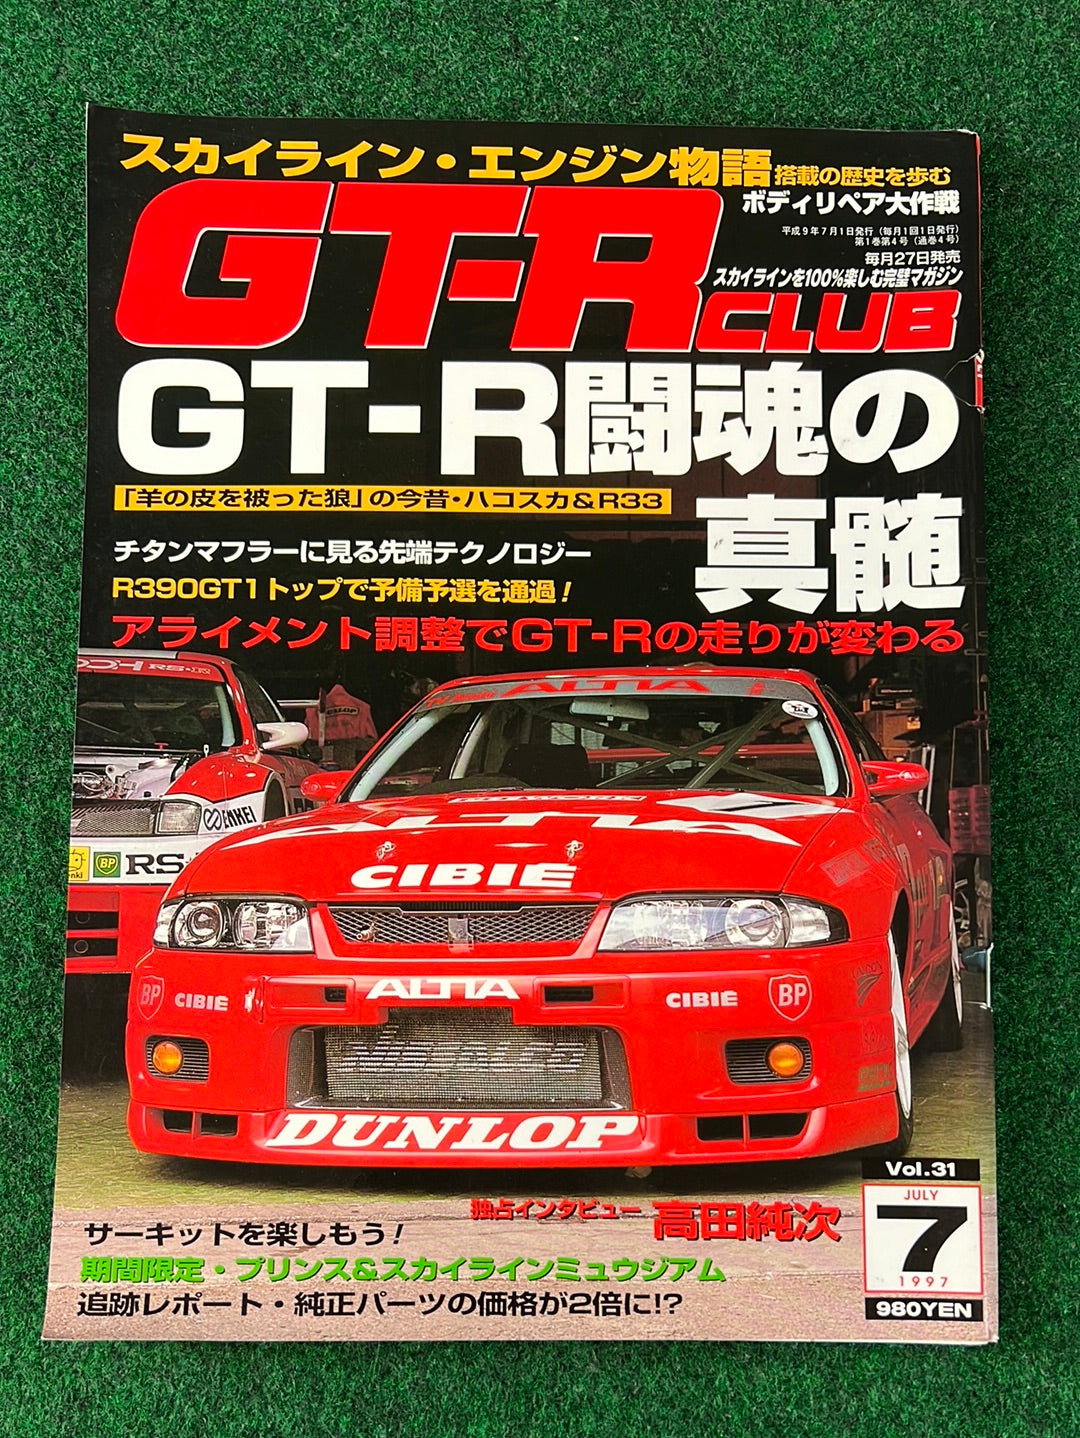 GT-R Club Magazine - Vol. 31